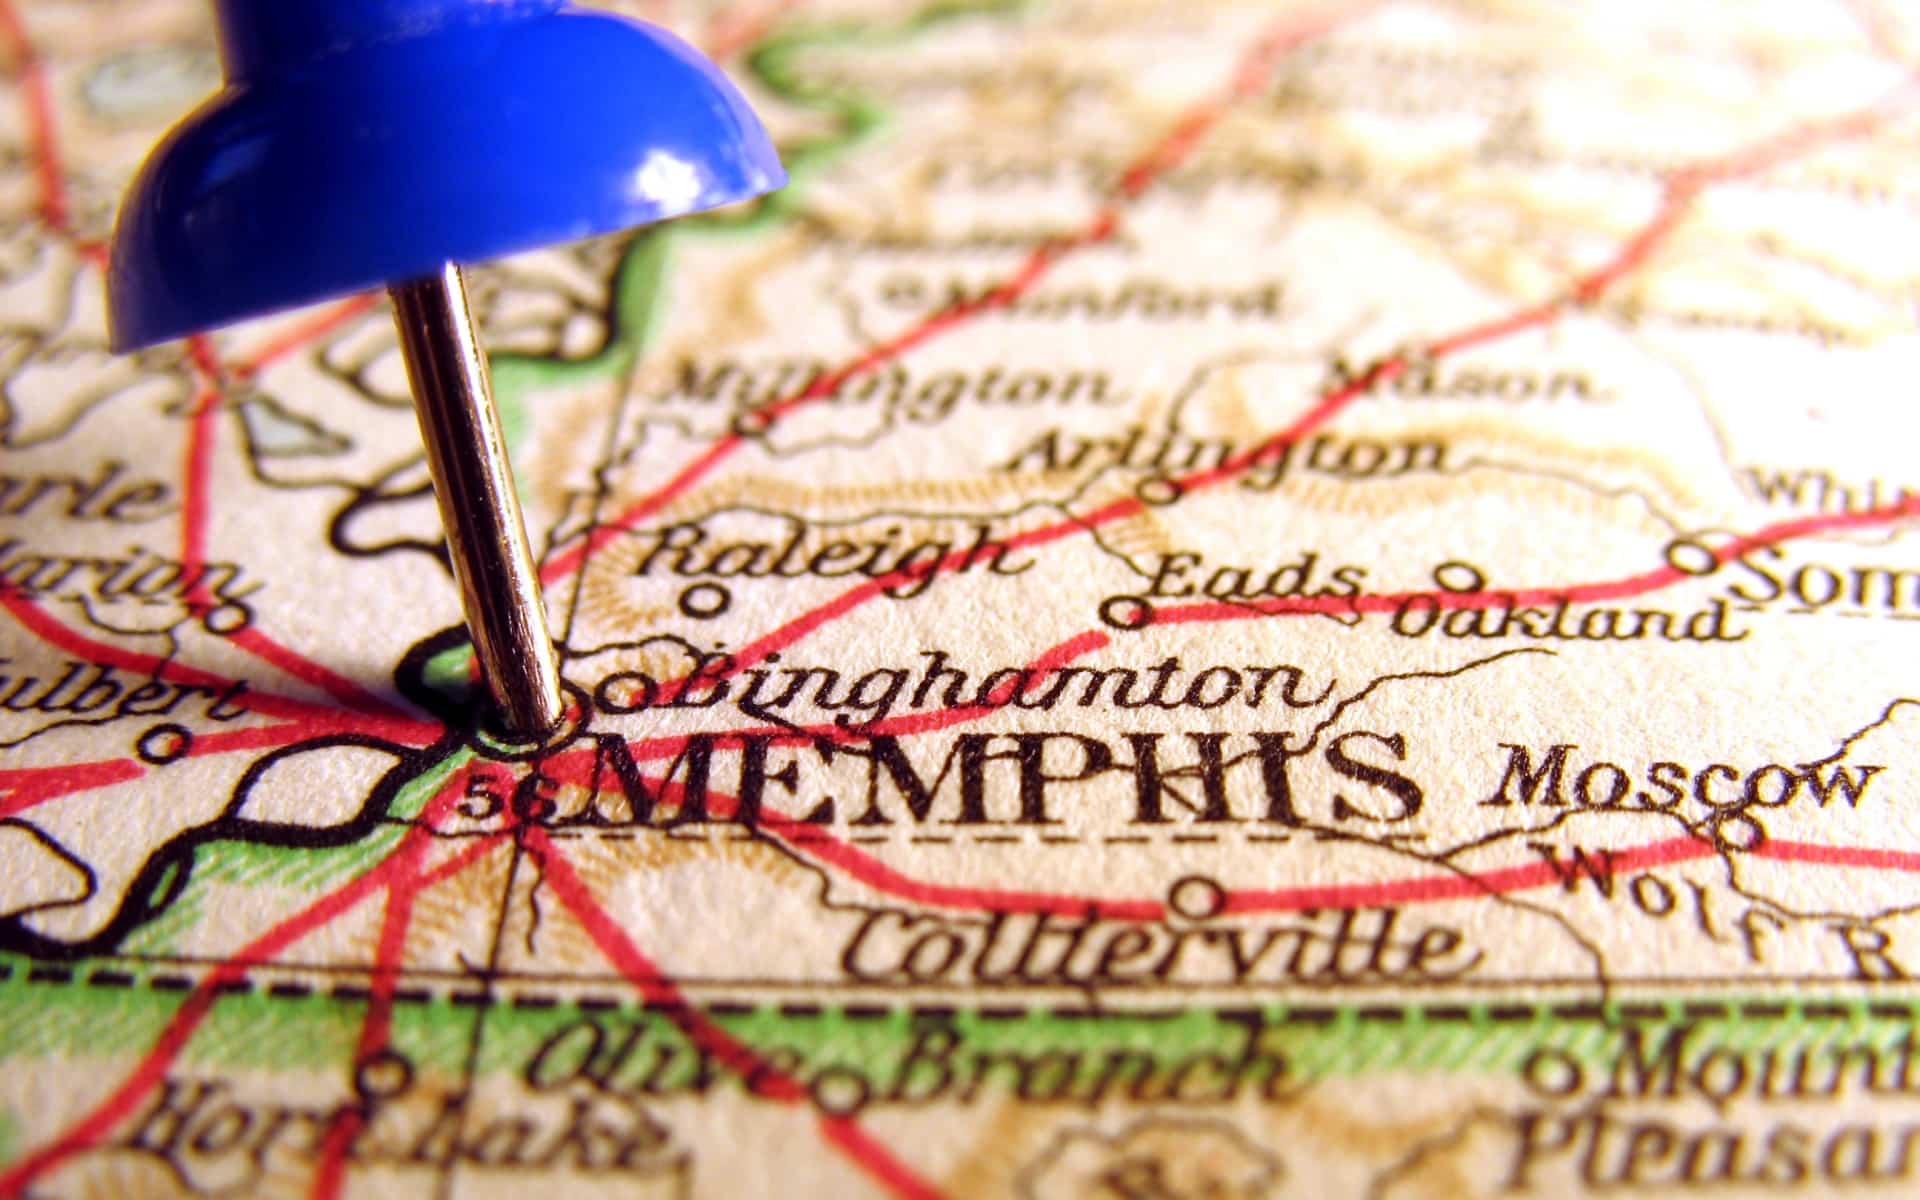 Travel to Memphis